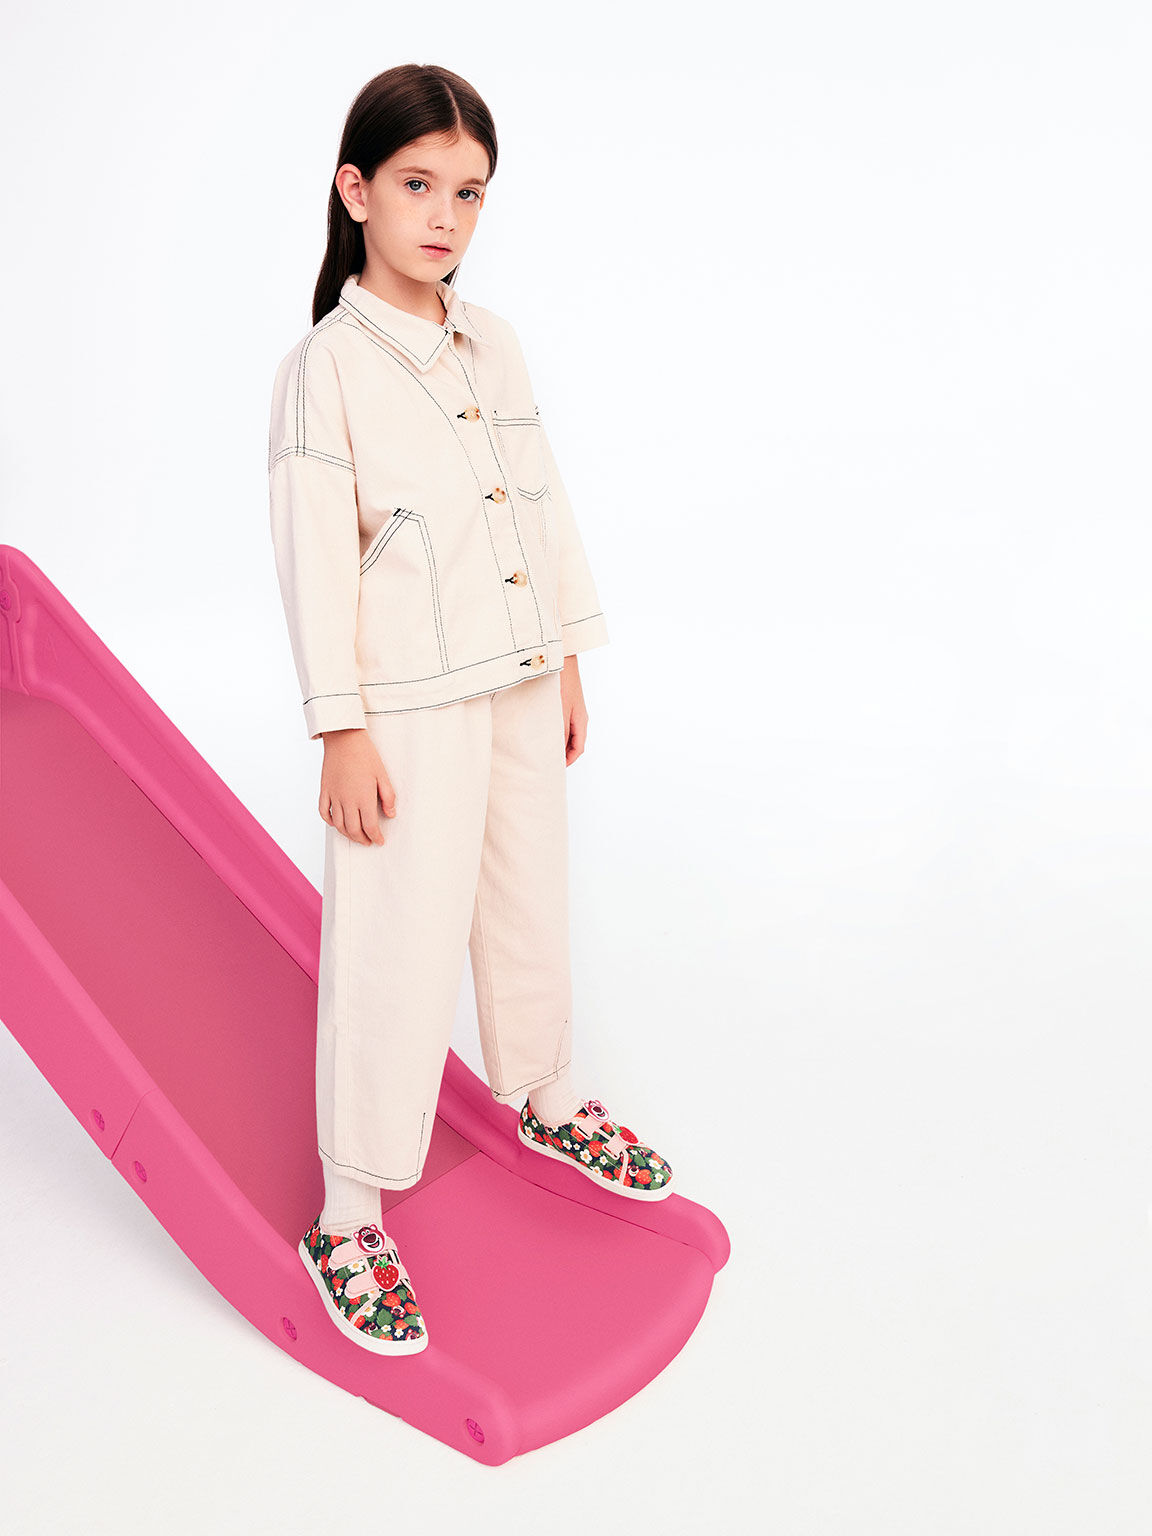 Girls' Lotso Strawberry-Print Sneakers, Pink, hi-res